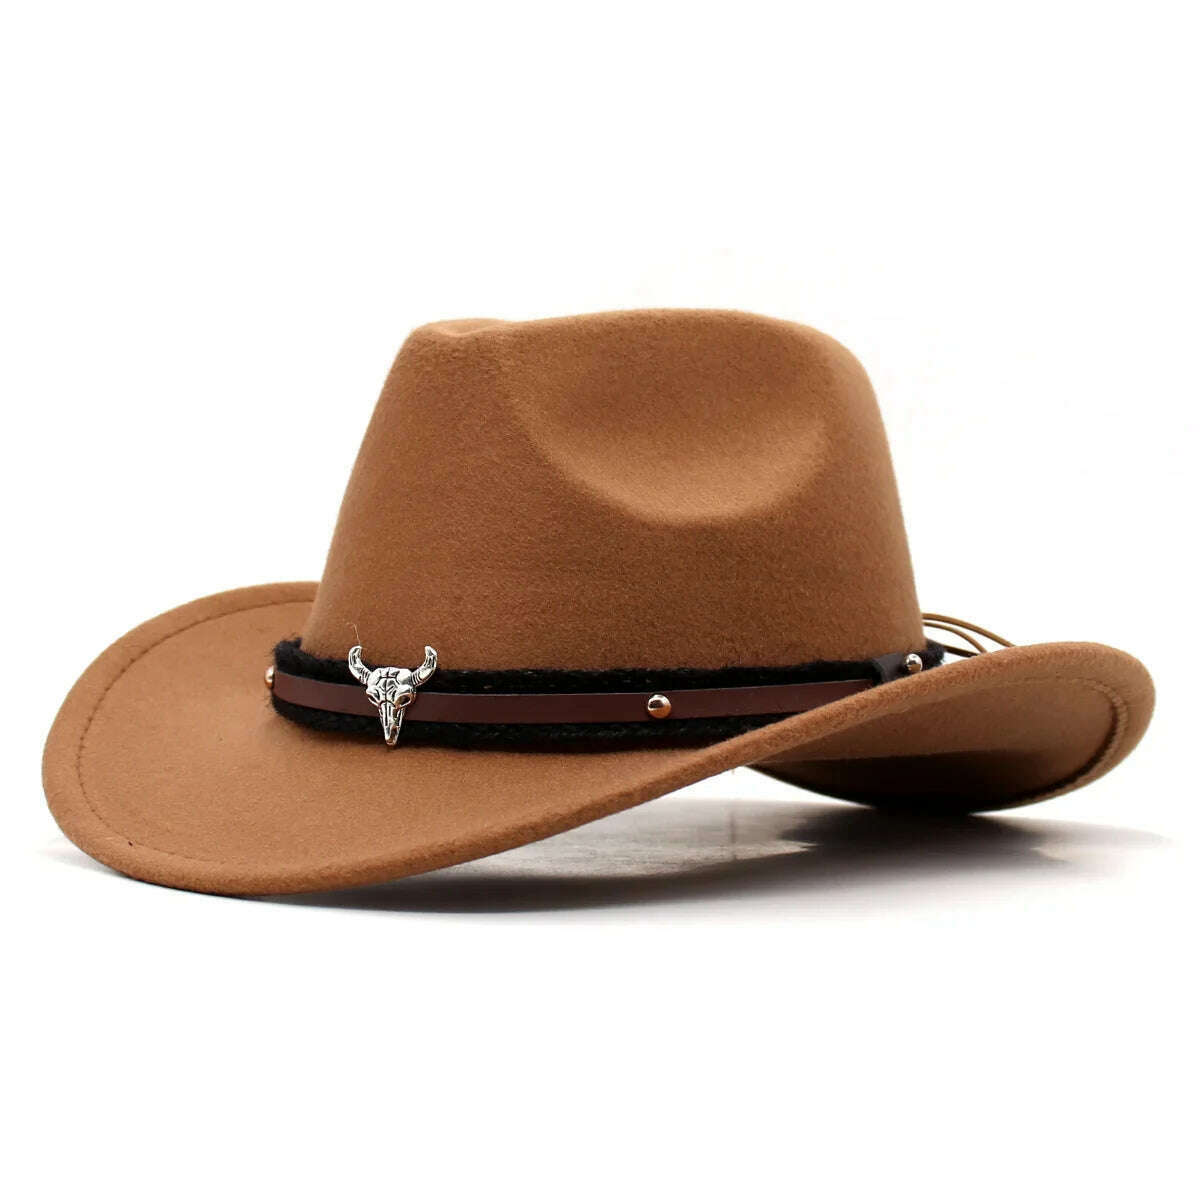 KIMLUD, Western Cowboy Black Hat With Bull Decor Classic Wide Brim Jazz Imitation Wool Hats For Women Felt Hats With Cow Head Knight Hat, Khaki XiaoNT / S(52-54cm Child), KIMLUD Women's Clothes